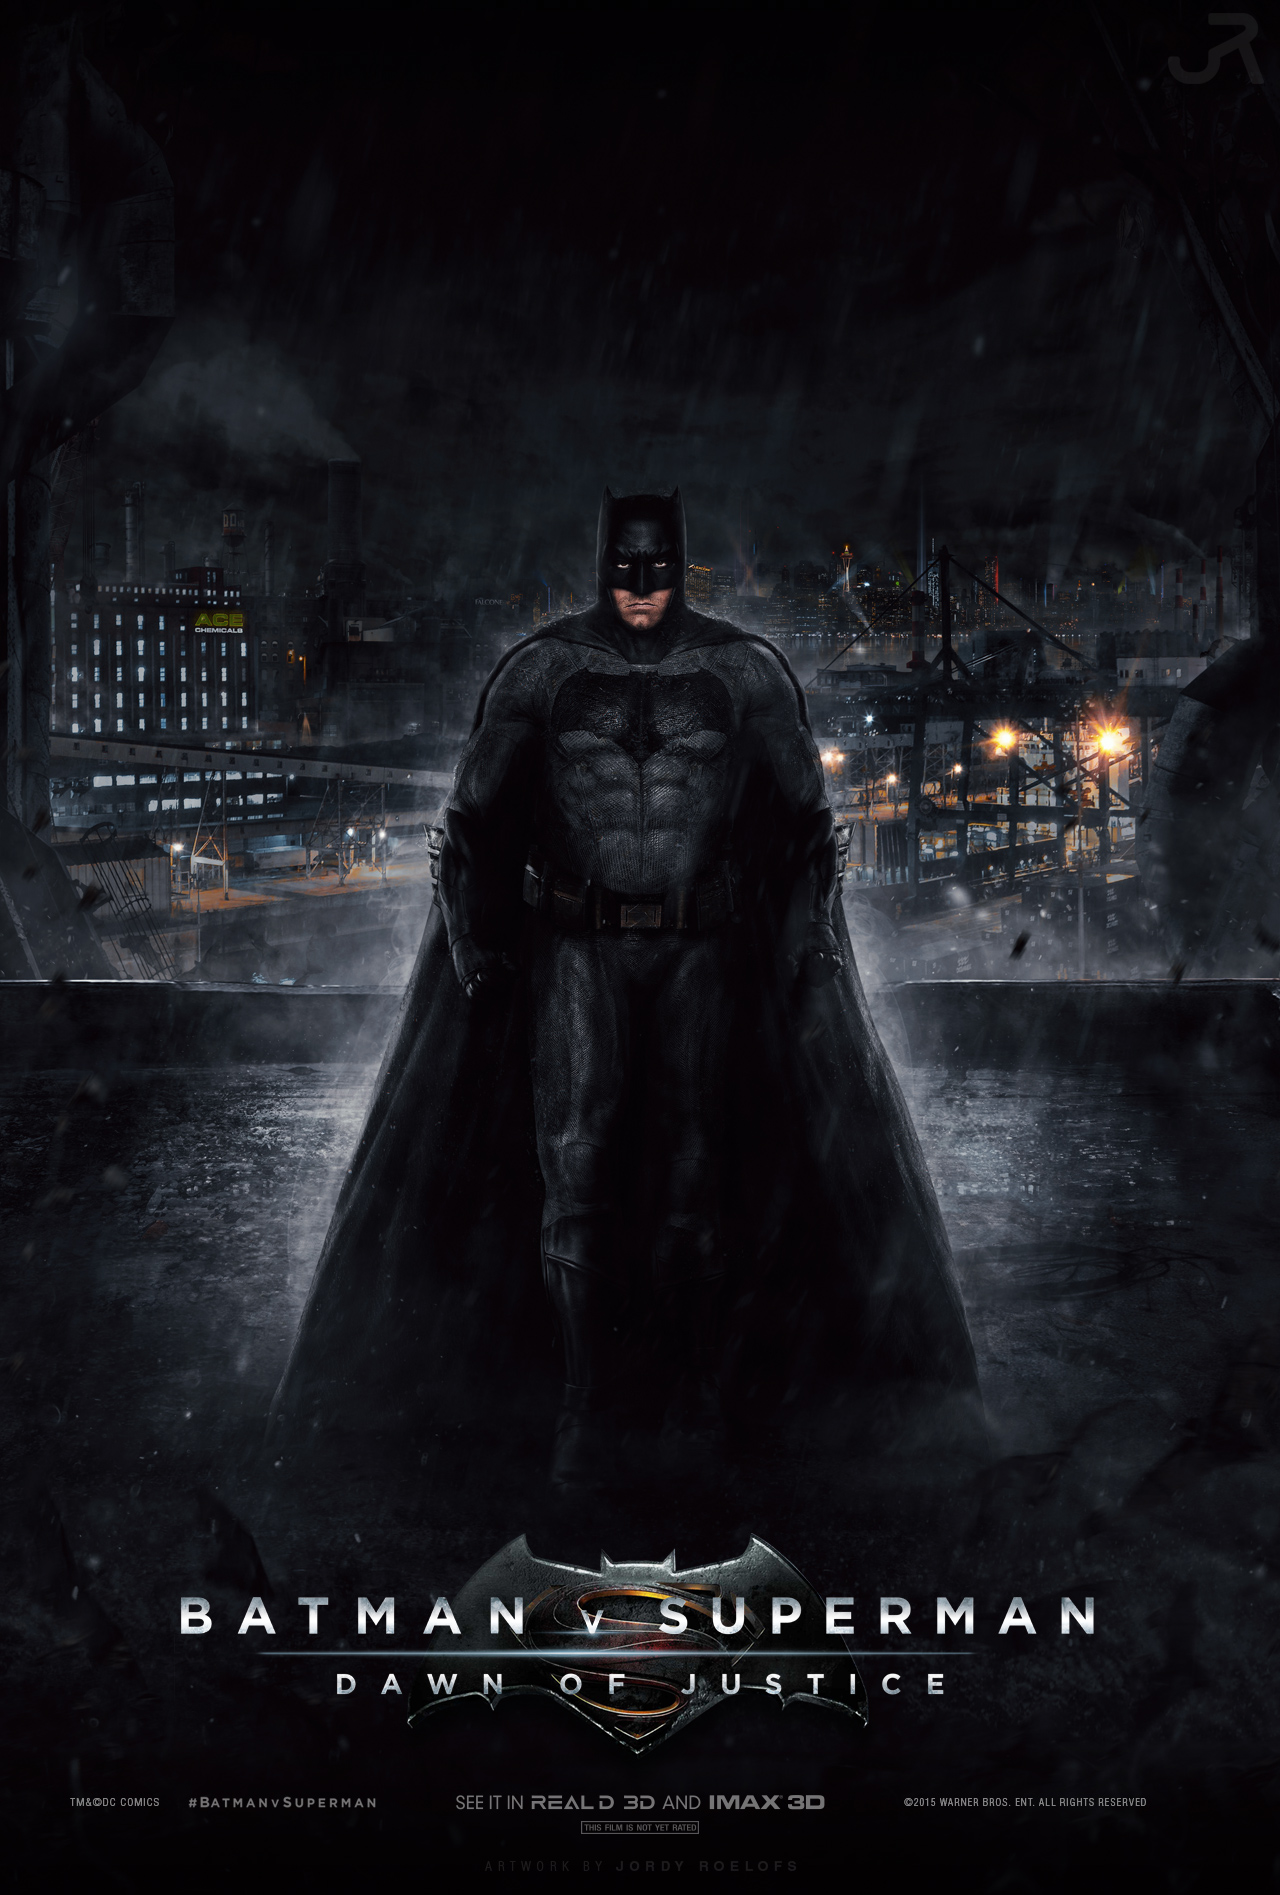 Batman v Superman: Dawn of Justice (Poster #4) by visuasys on DeviantArt